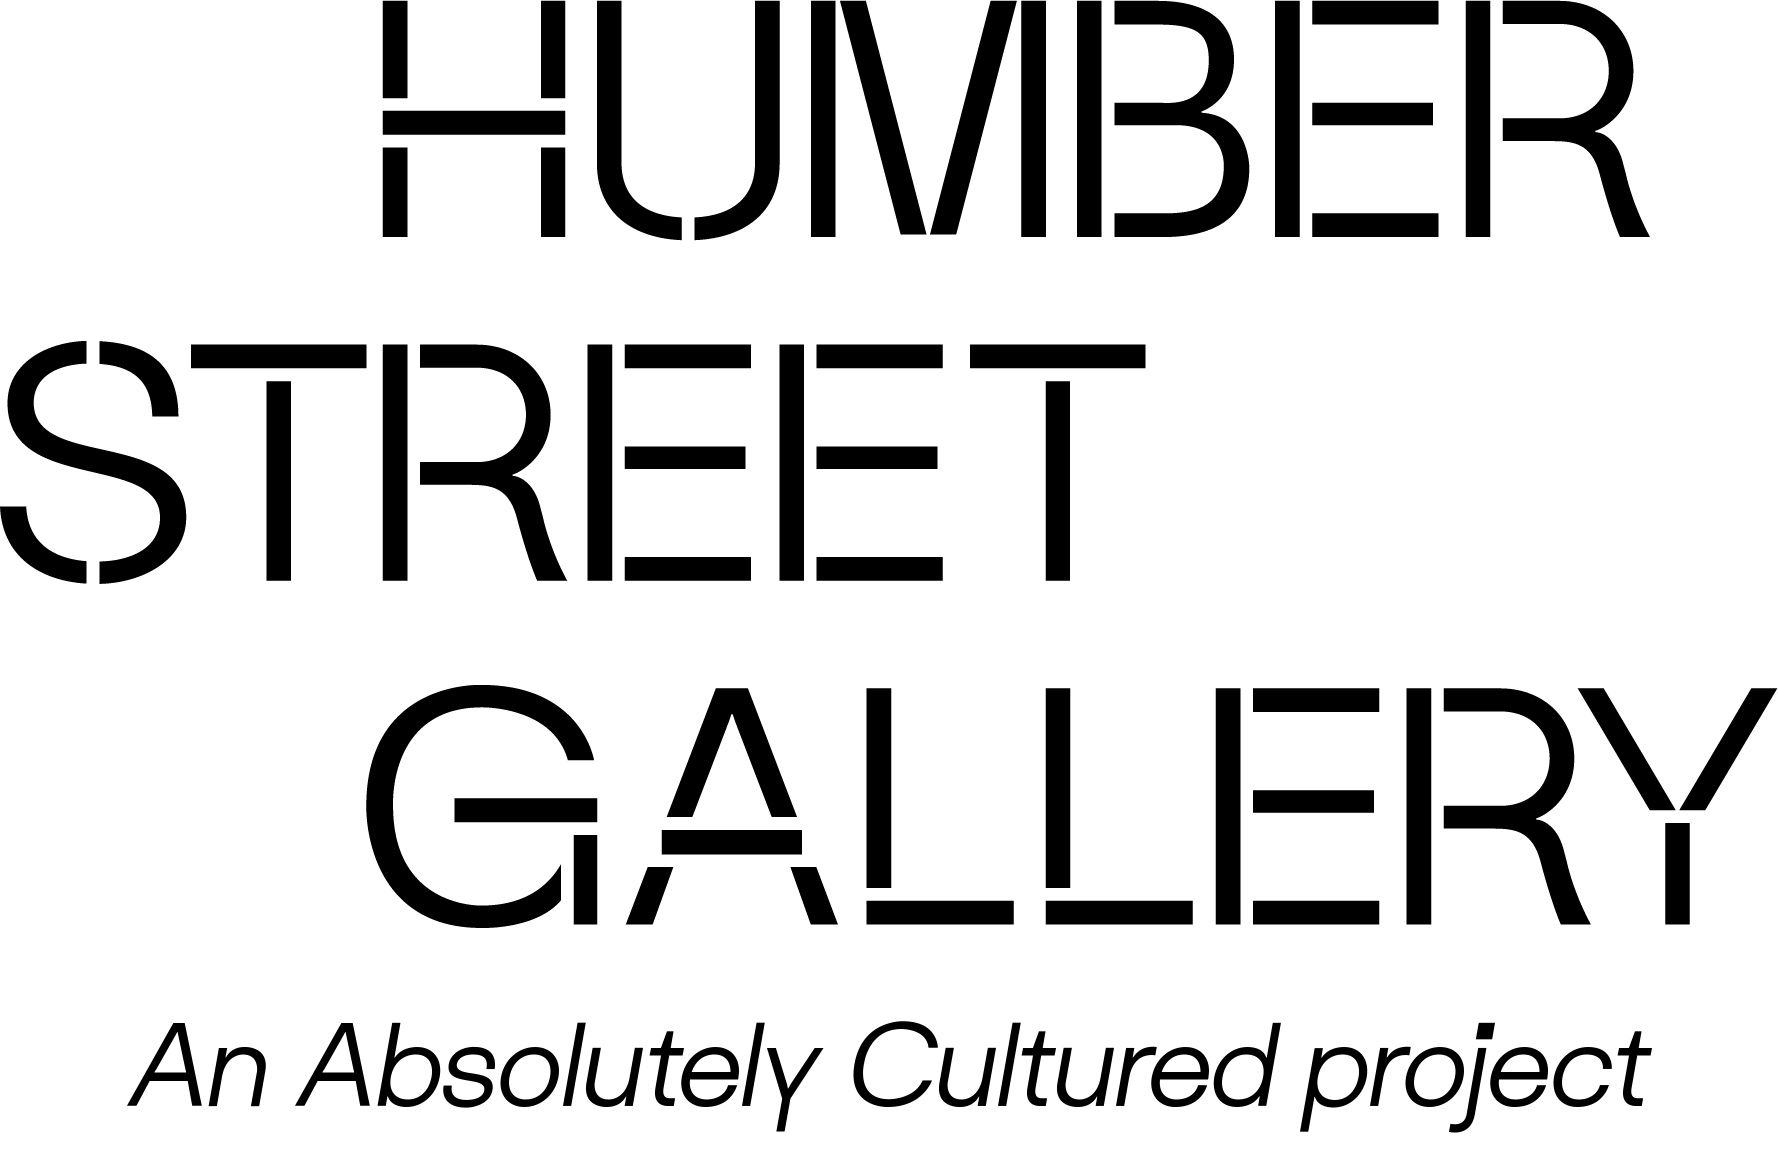 Humber Street Gallery